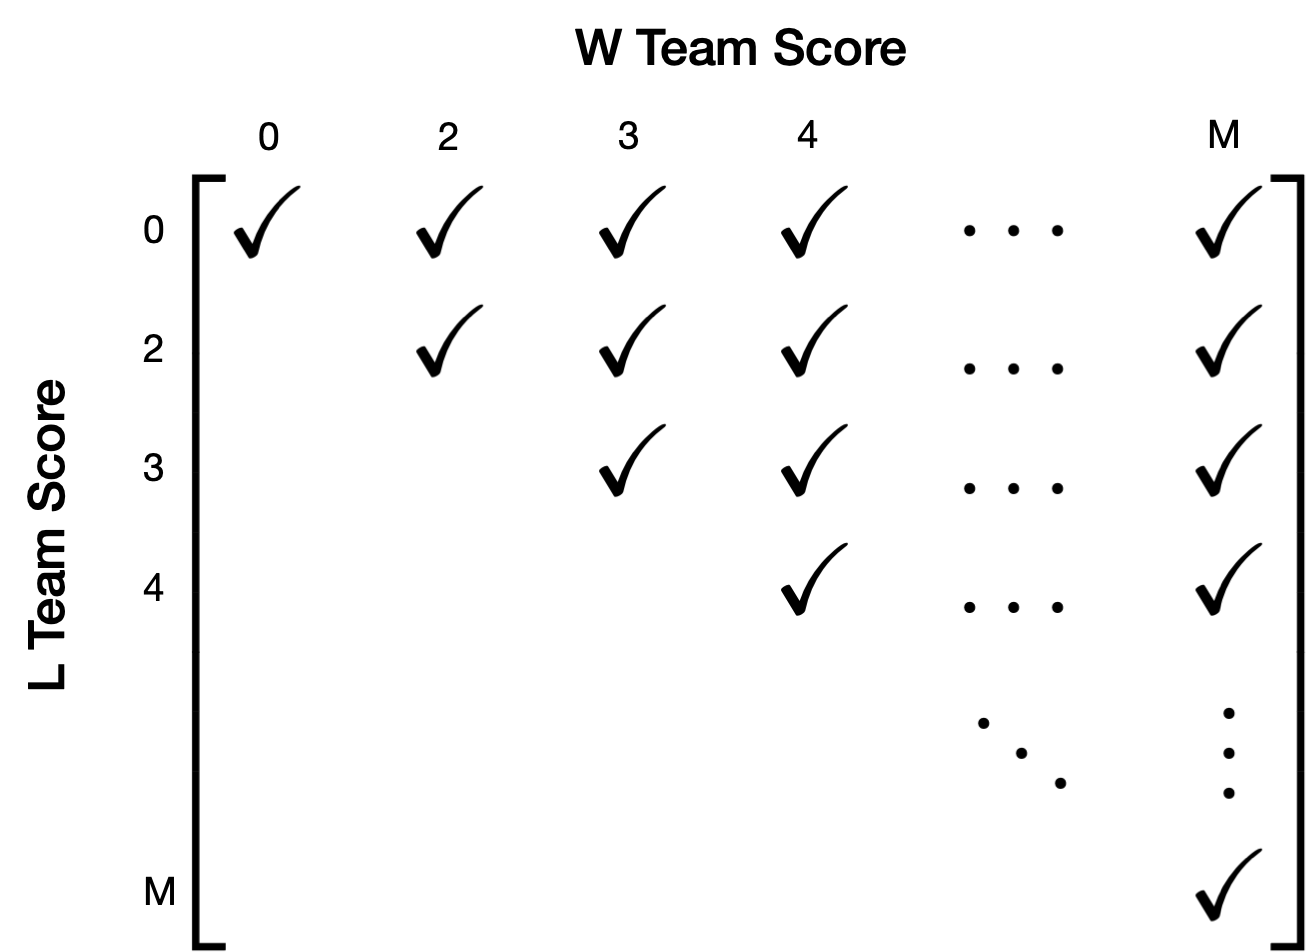 Matrix of possible scores